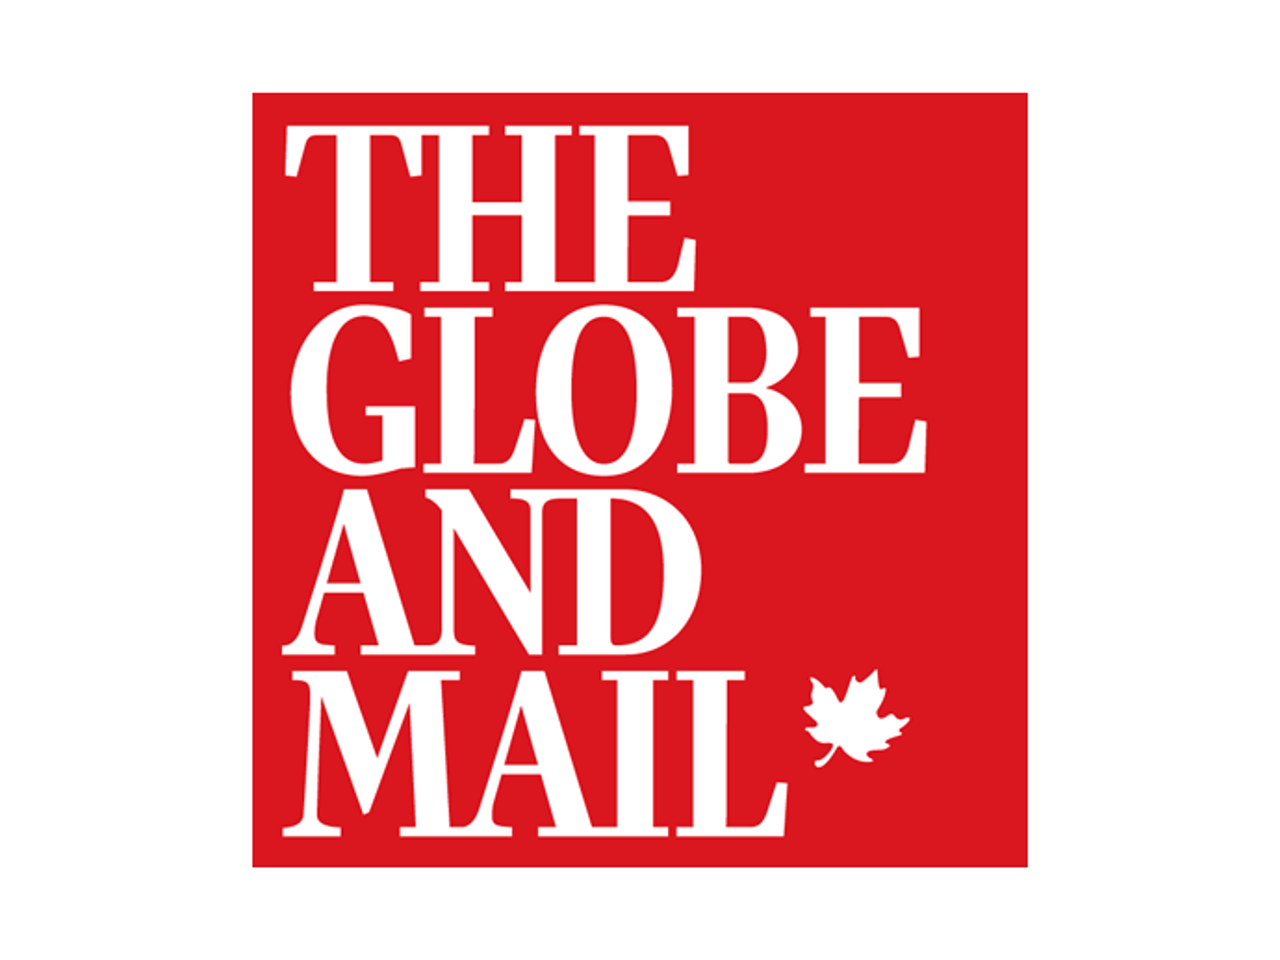 Globe and Mail